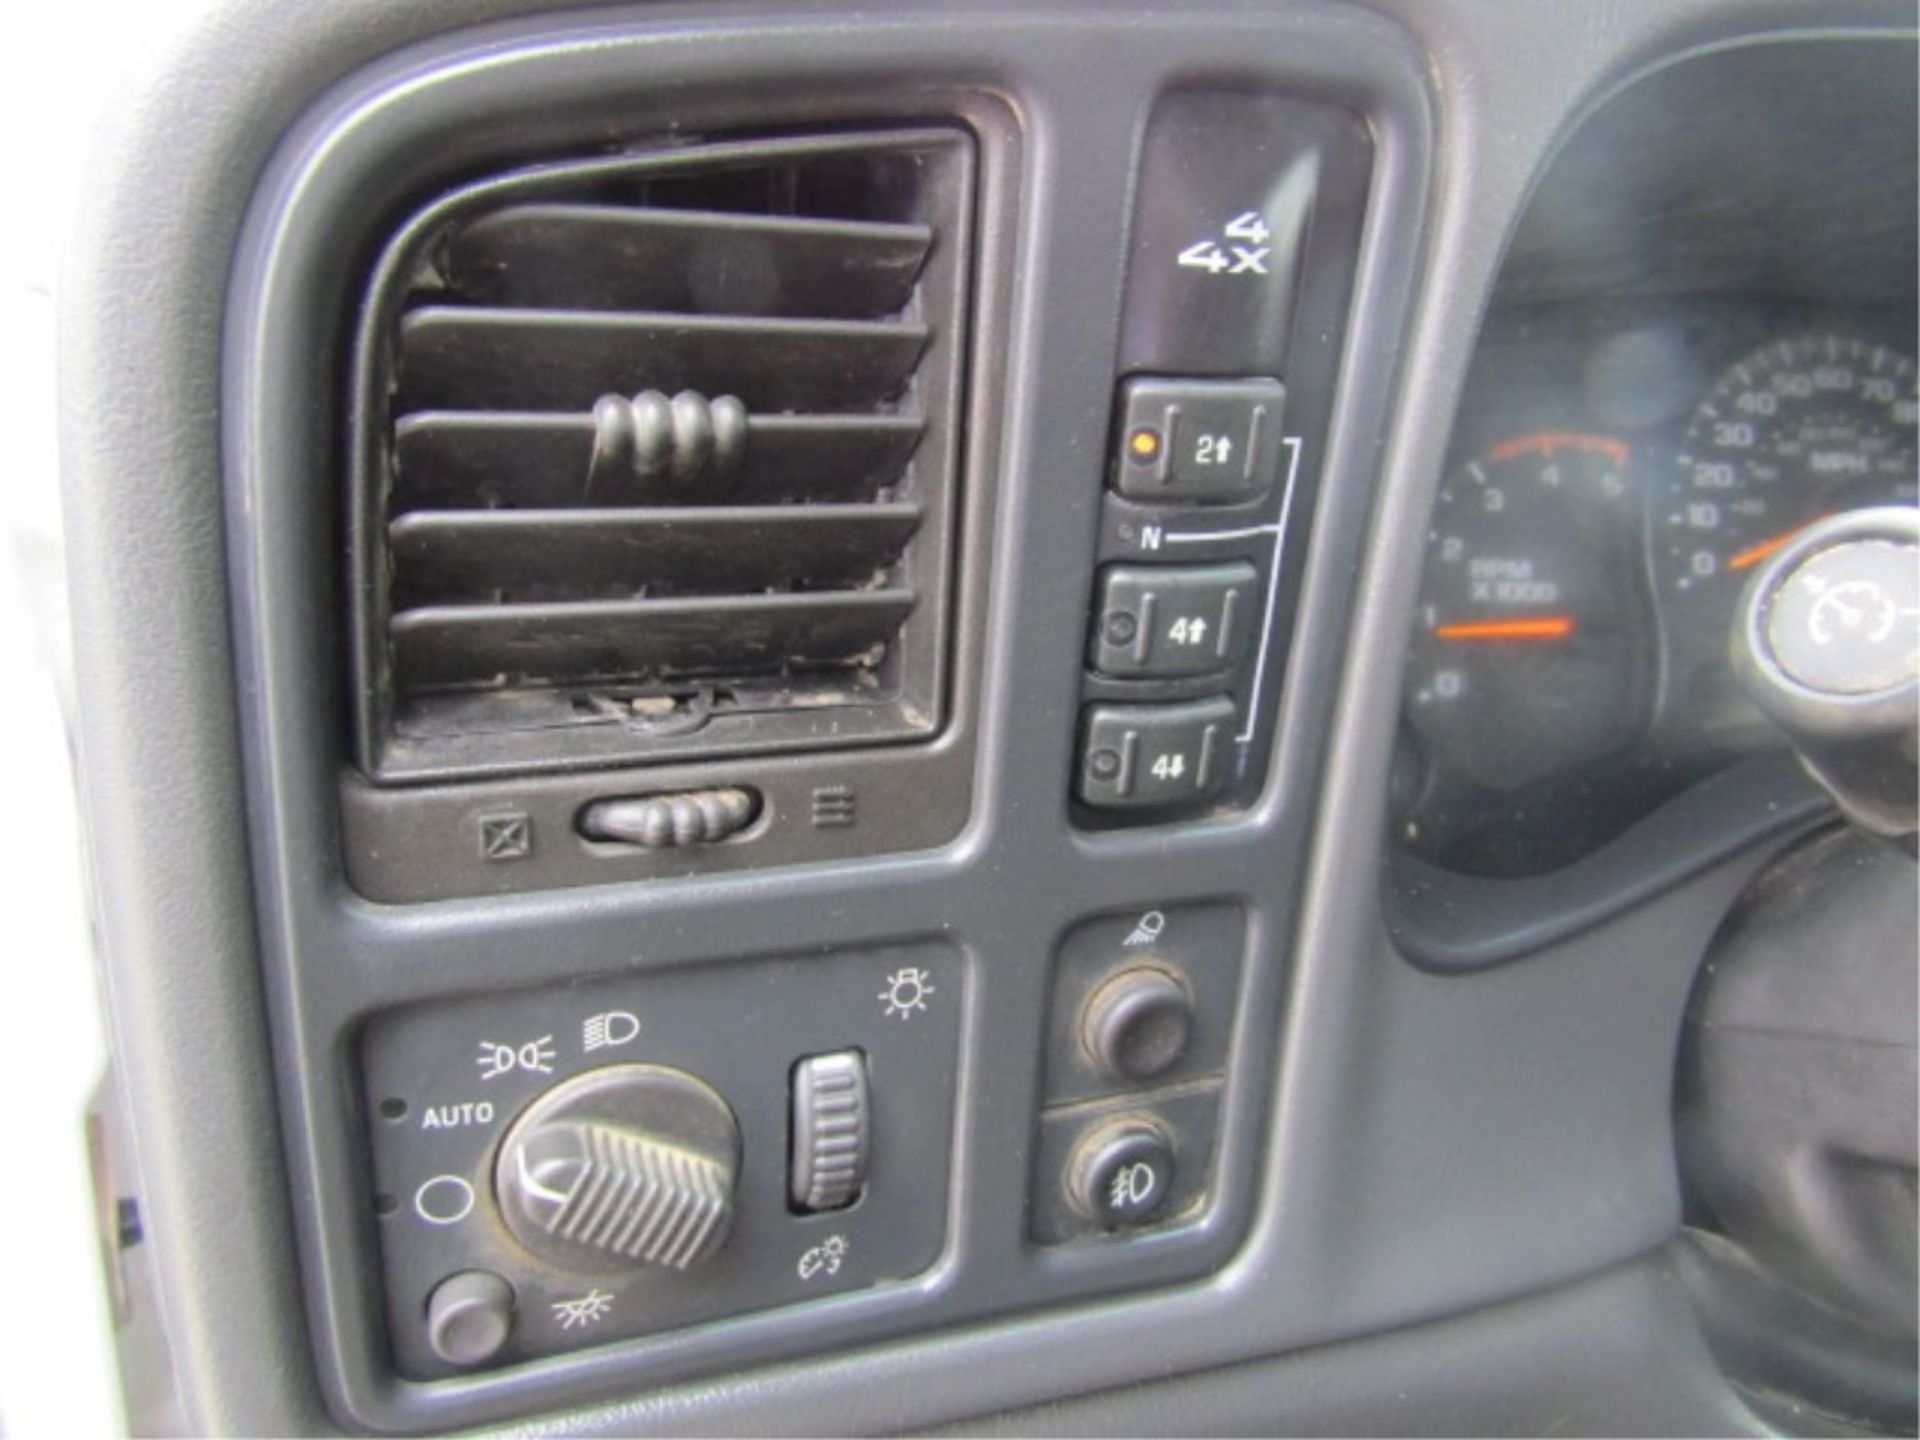 2003 Chevy Silverado K2500 Club Cab Truck LongBed, 4 x 4, Vin #1GCHK29113E155250, Automatic 4x4 - Image 9 of 19